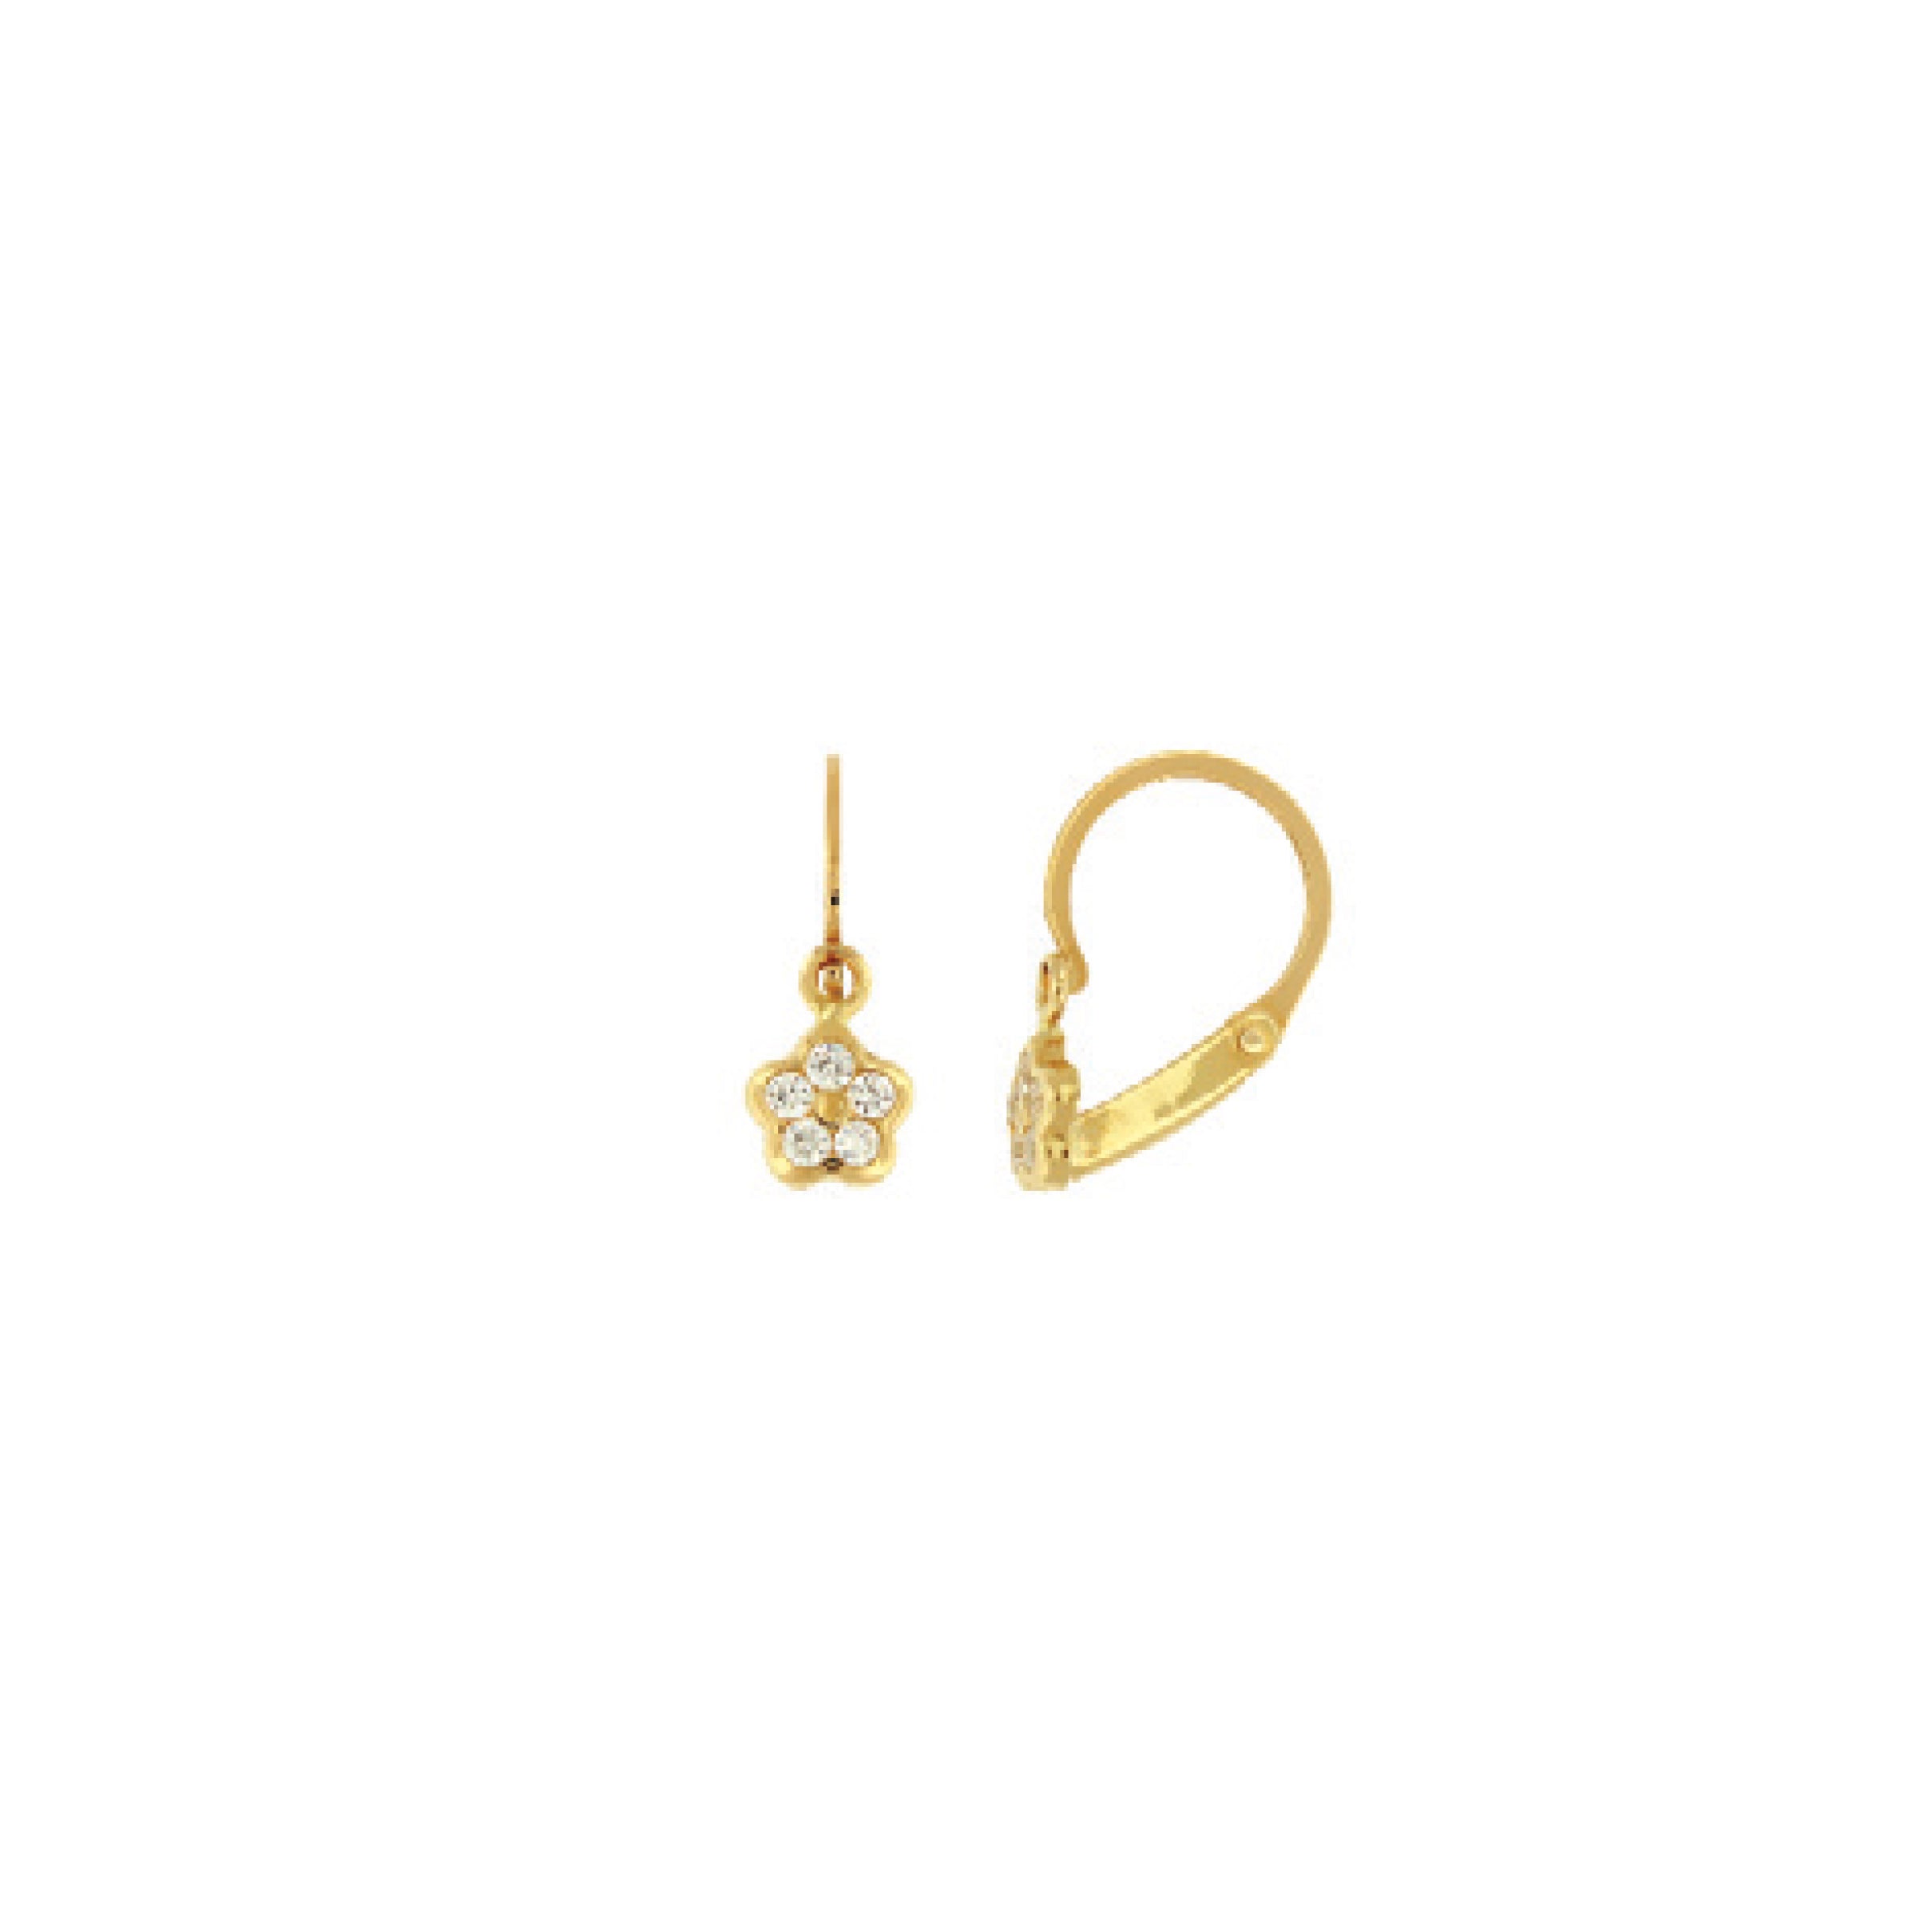 Bfly 10k Gold CZ Flower French Hoop Baby Earrings